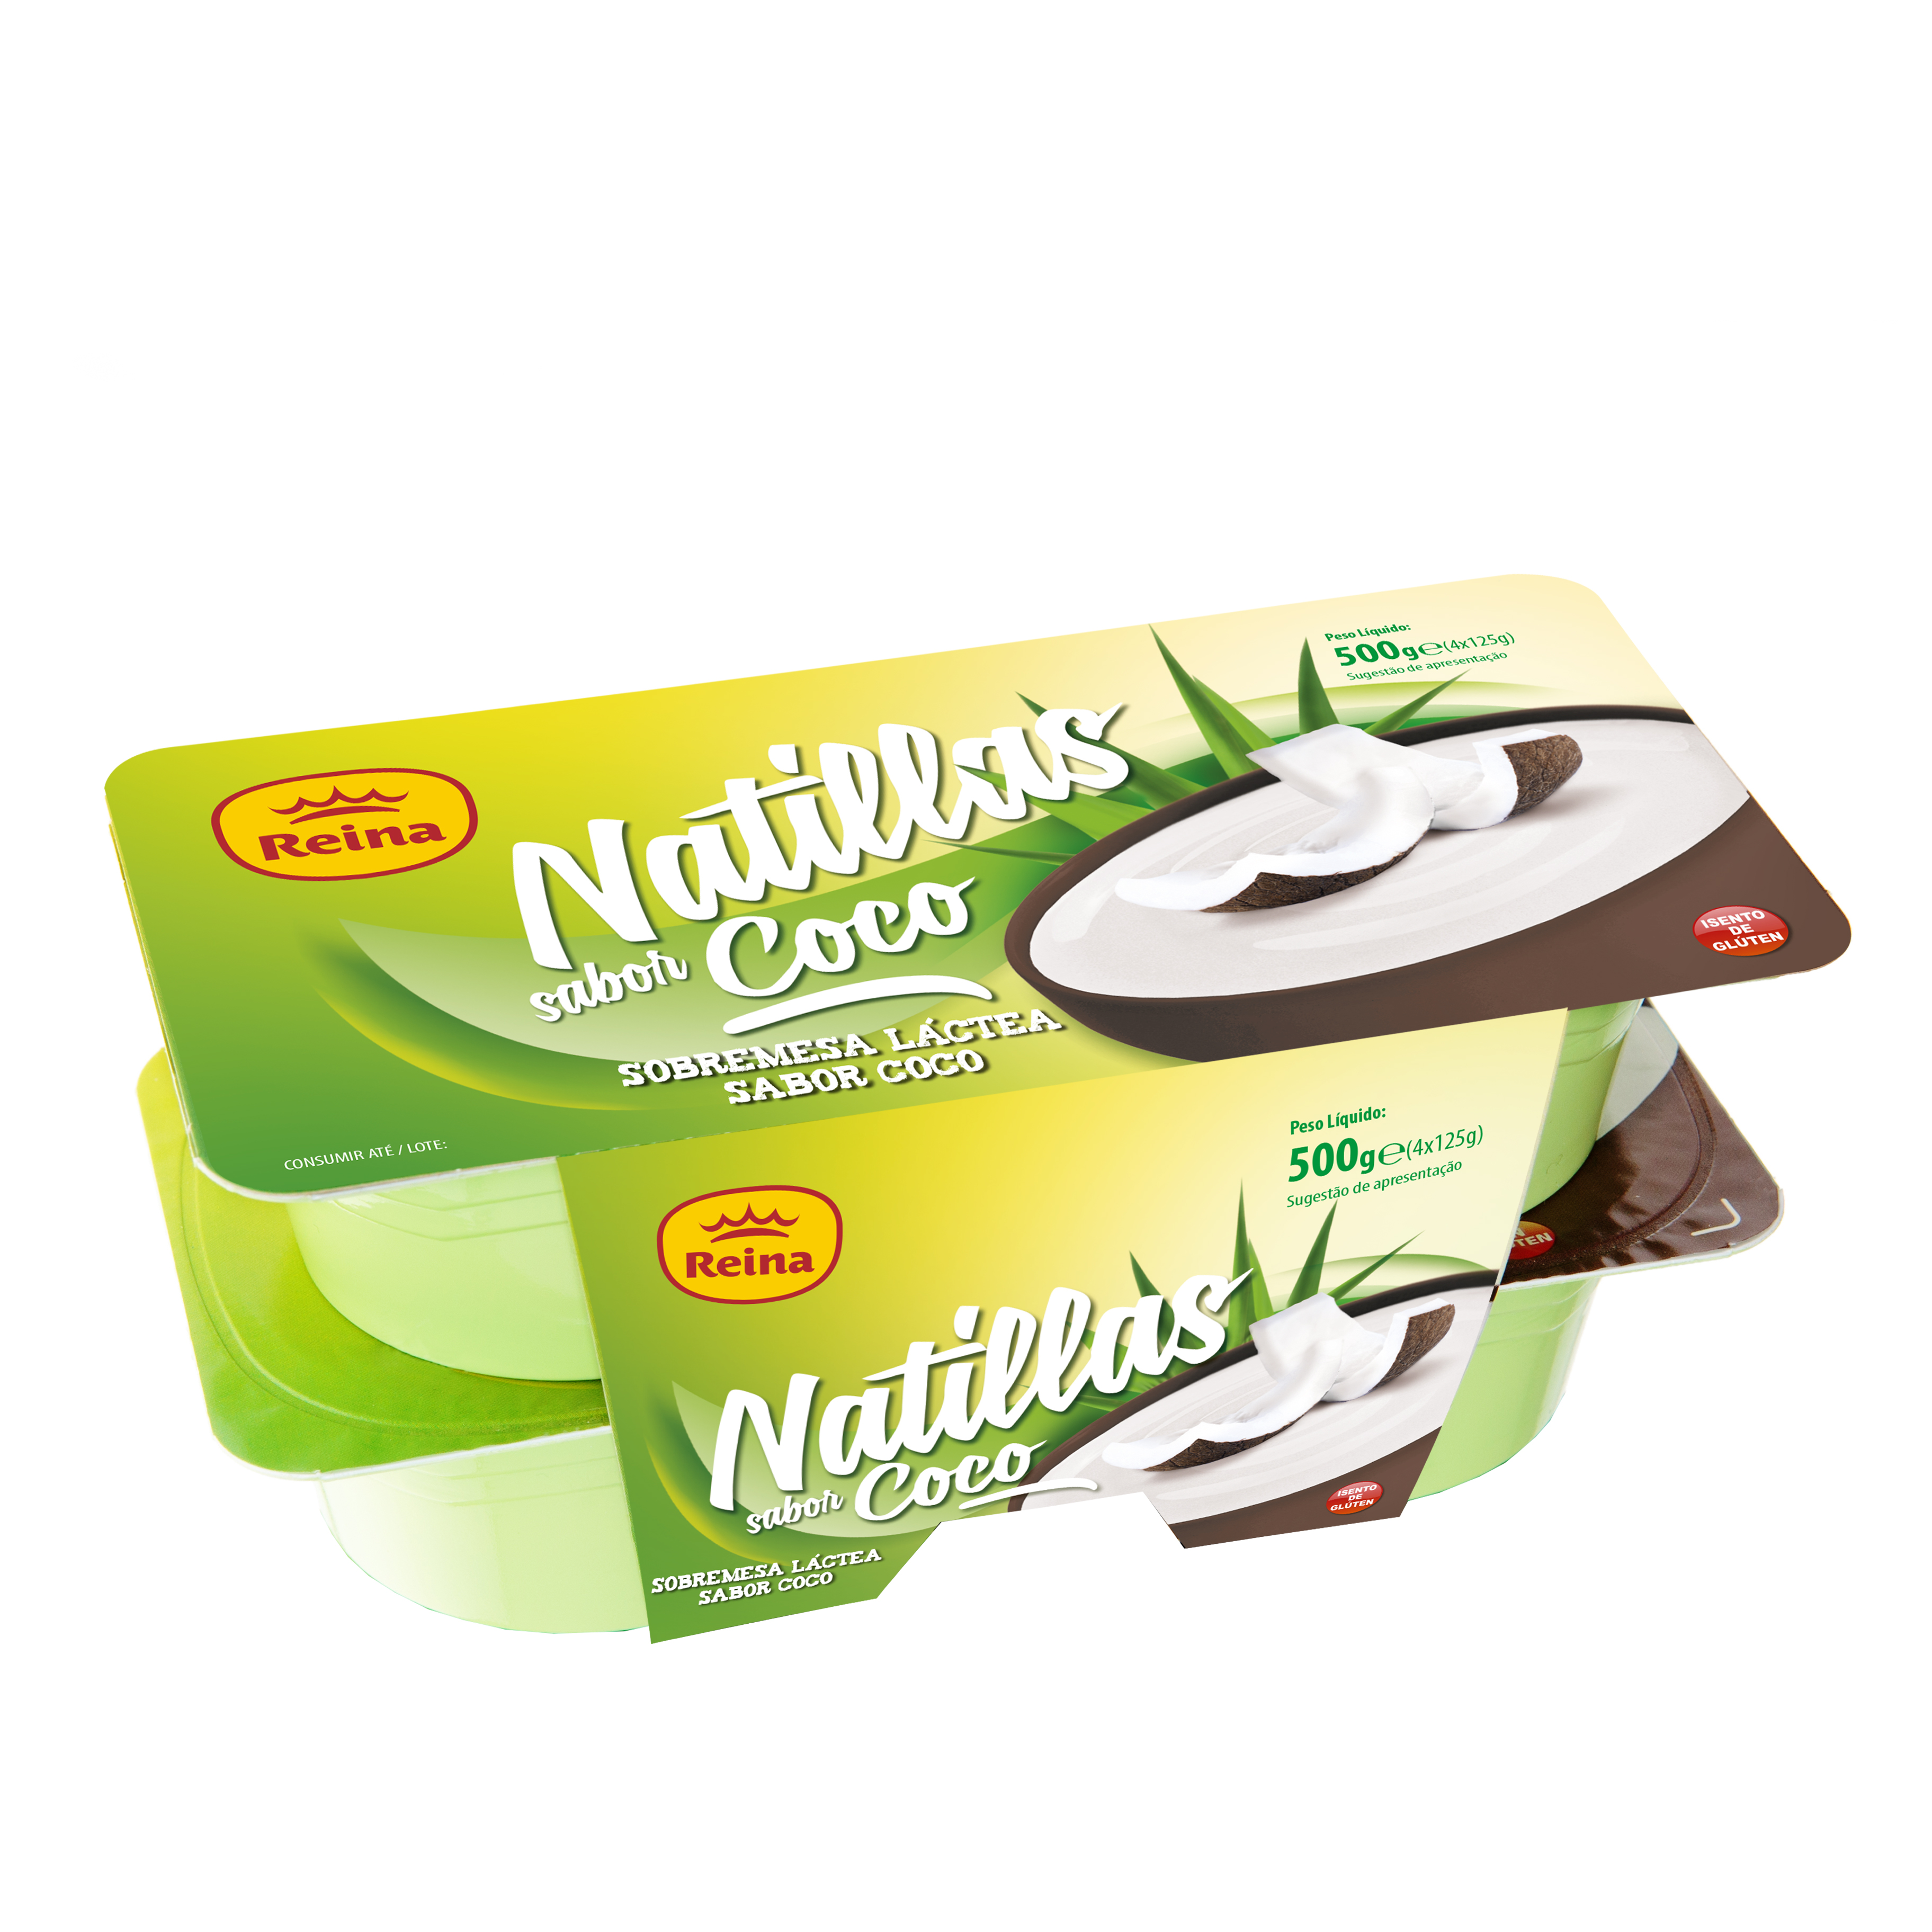 natilhas-sabore-coco